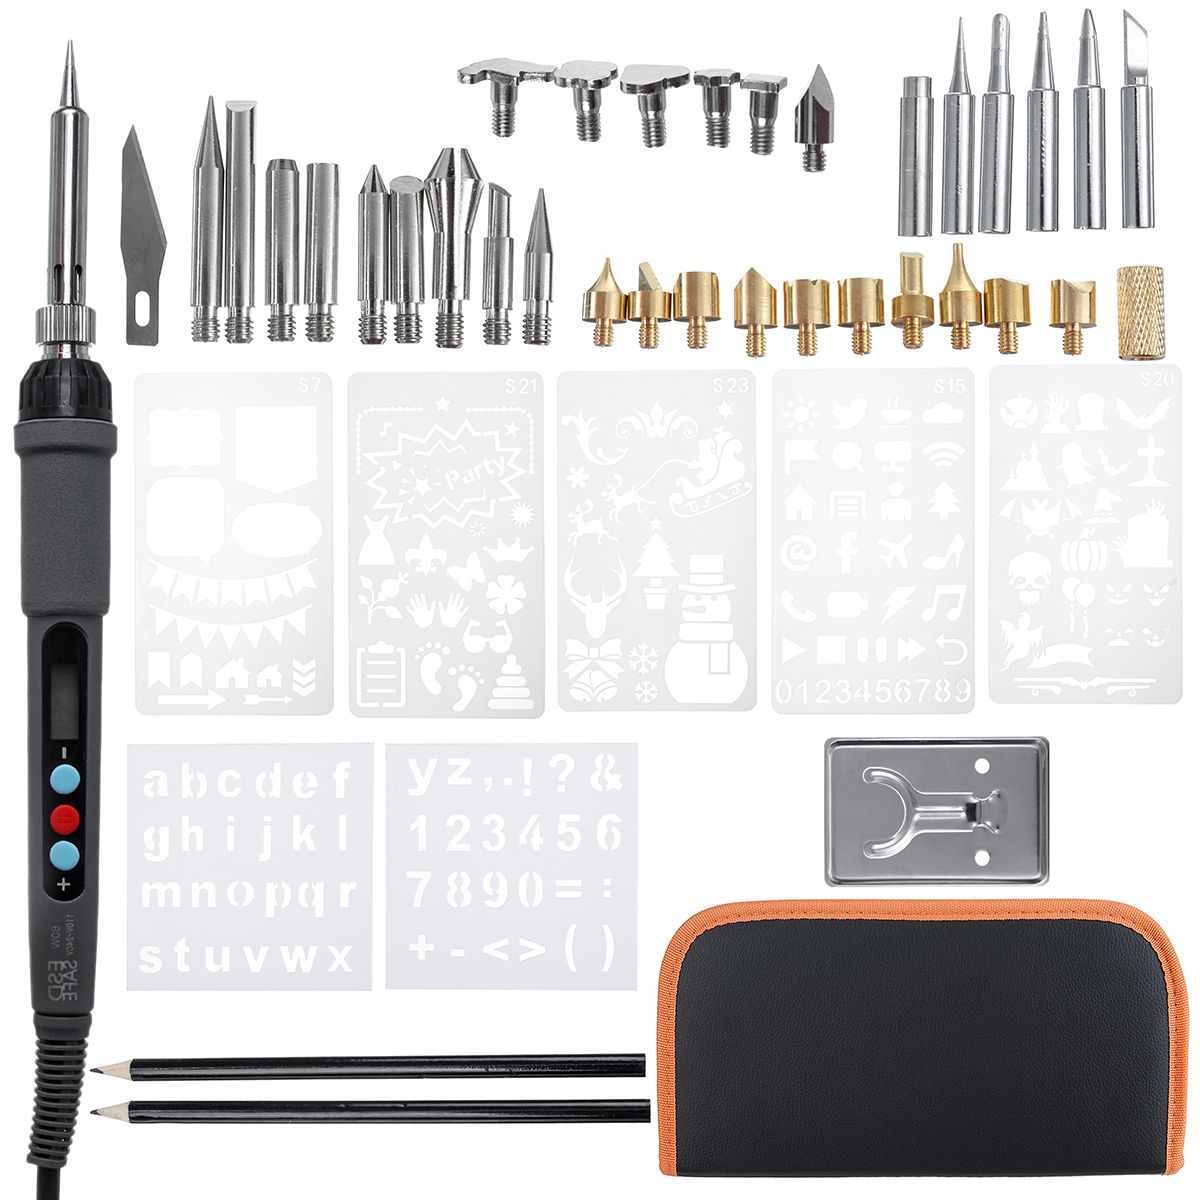 42Pcs-60W-Wood-Burning-Pen-Tool-Soldering-Stencil-Iron-Craft-LCD-Pyrography-Soldering-Tools-Kit-1632145